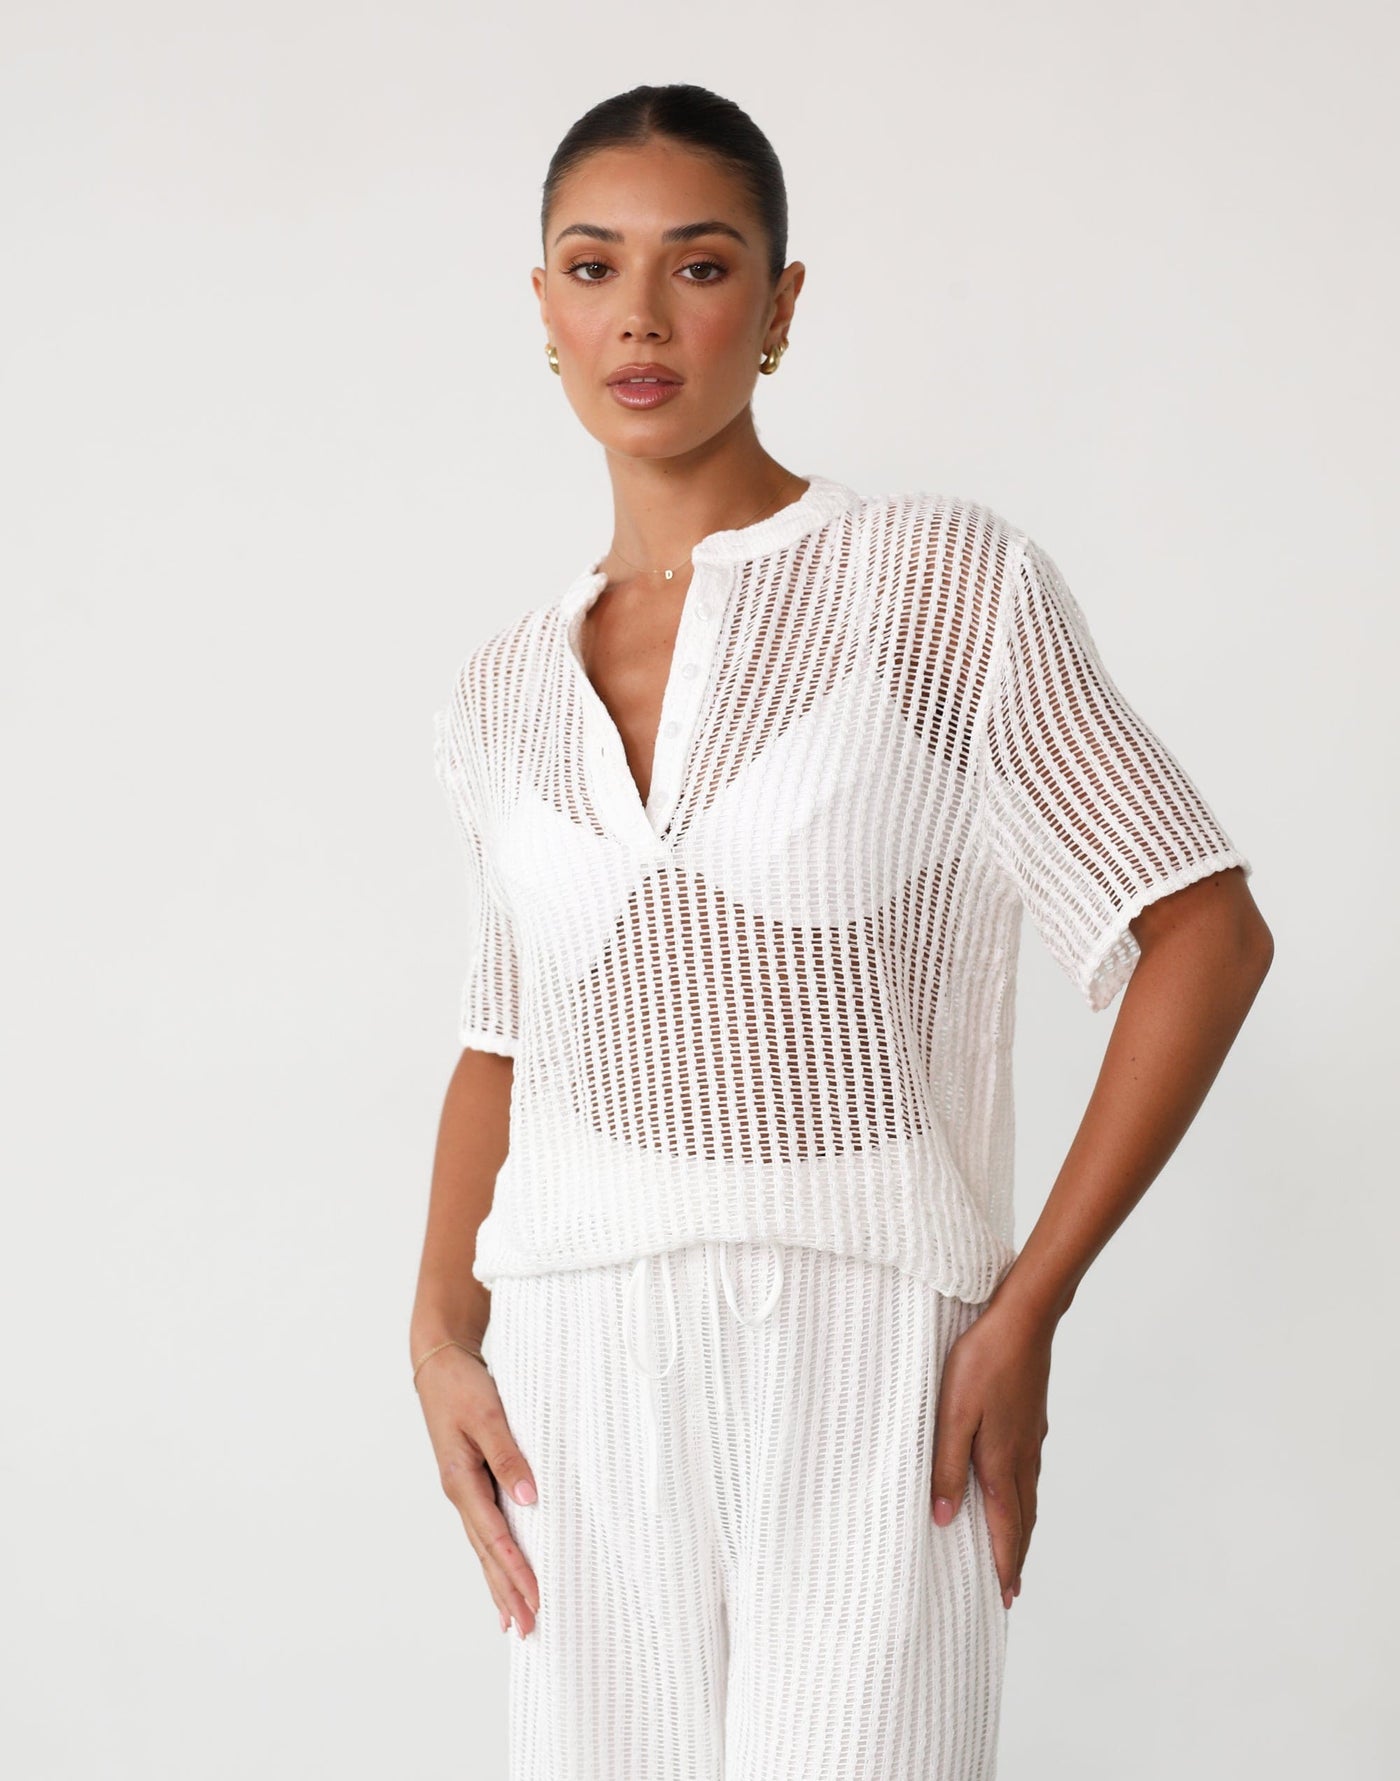 Aliyna Shirt (White) - White Crochet Short Sleeve Shirt - Women's Top - Charcoal Clothing